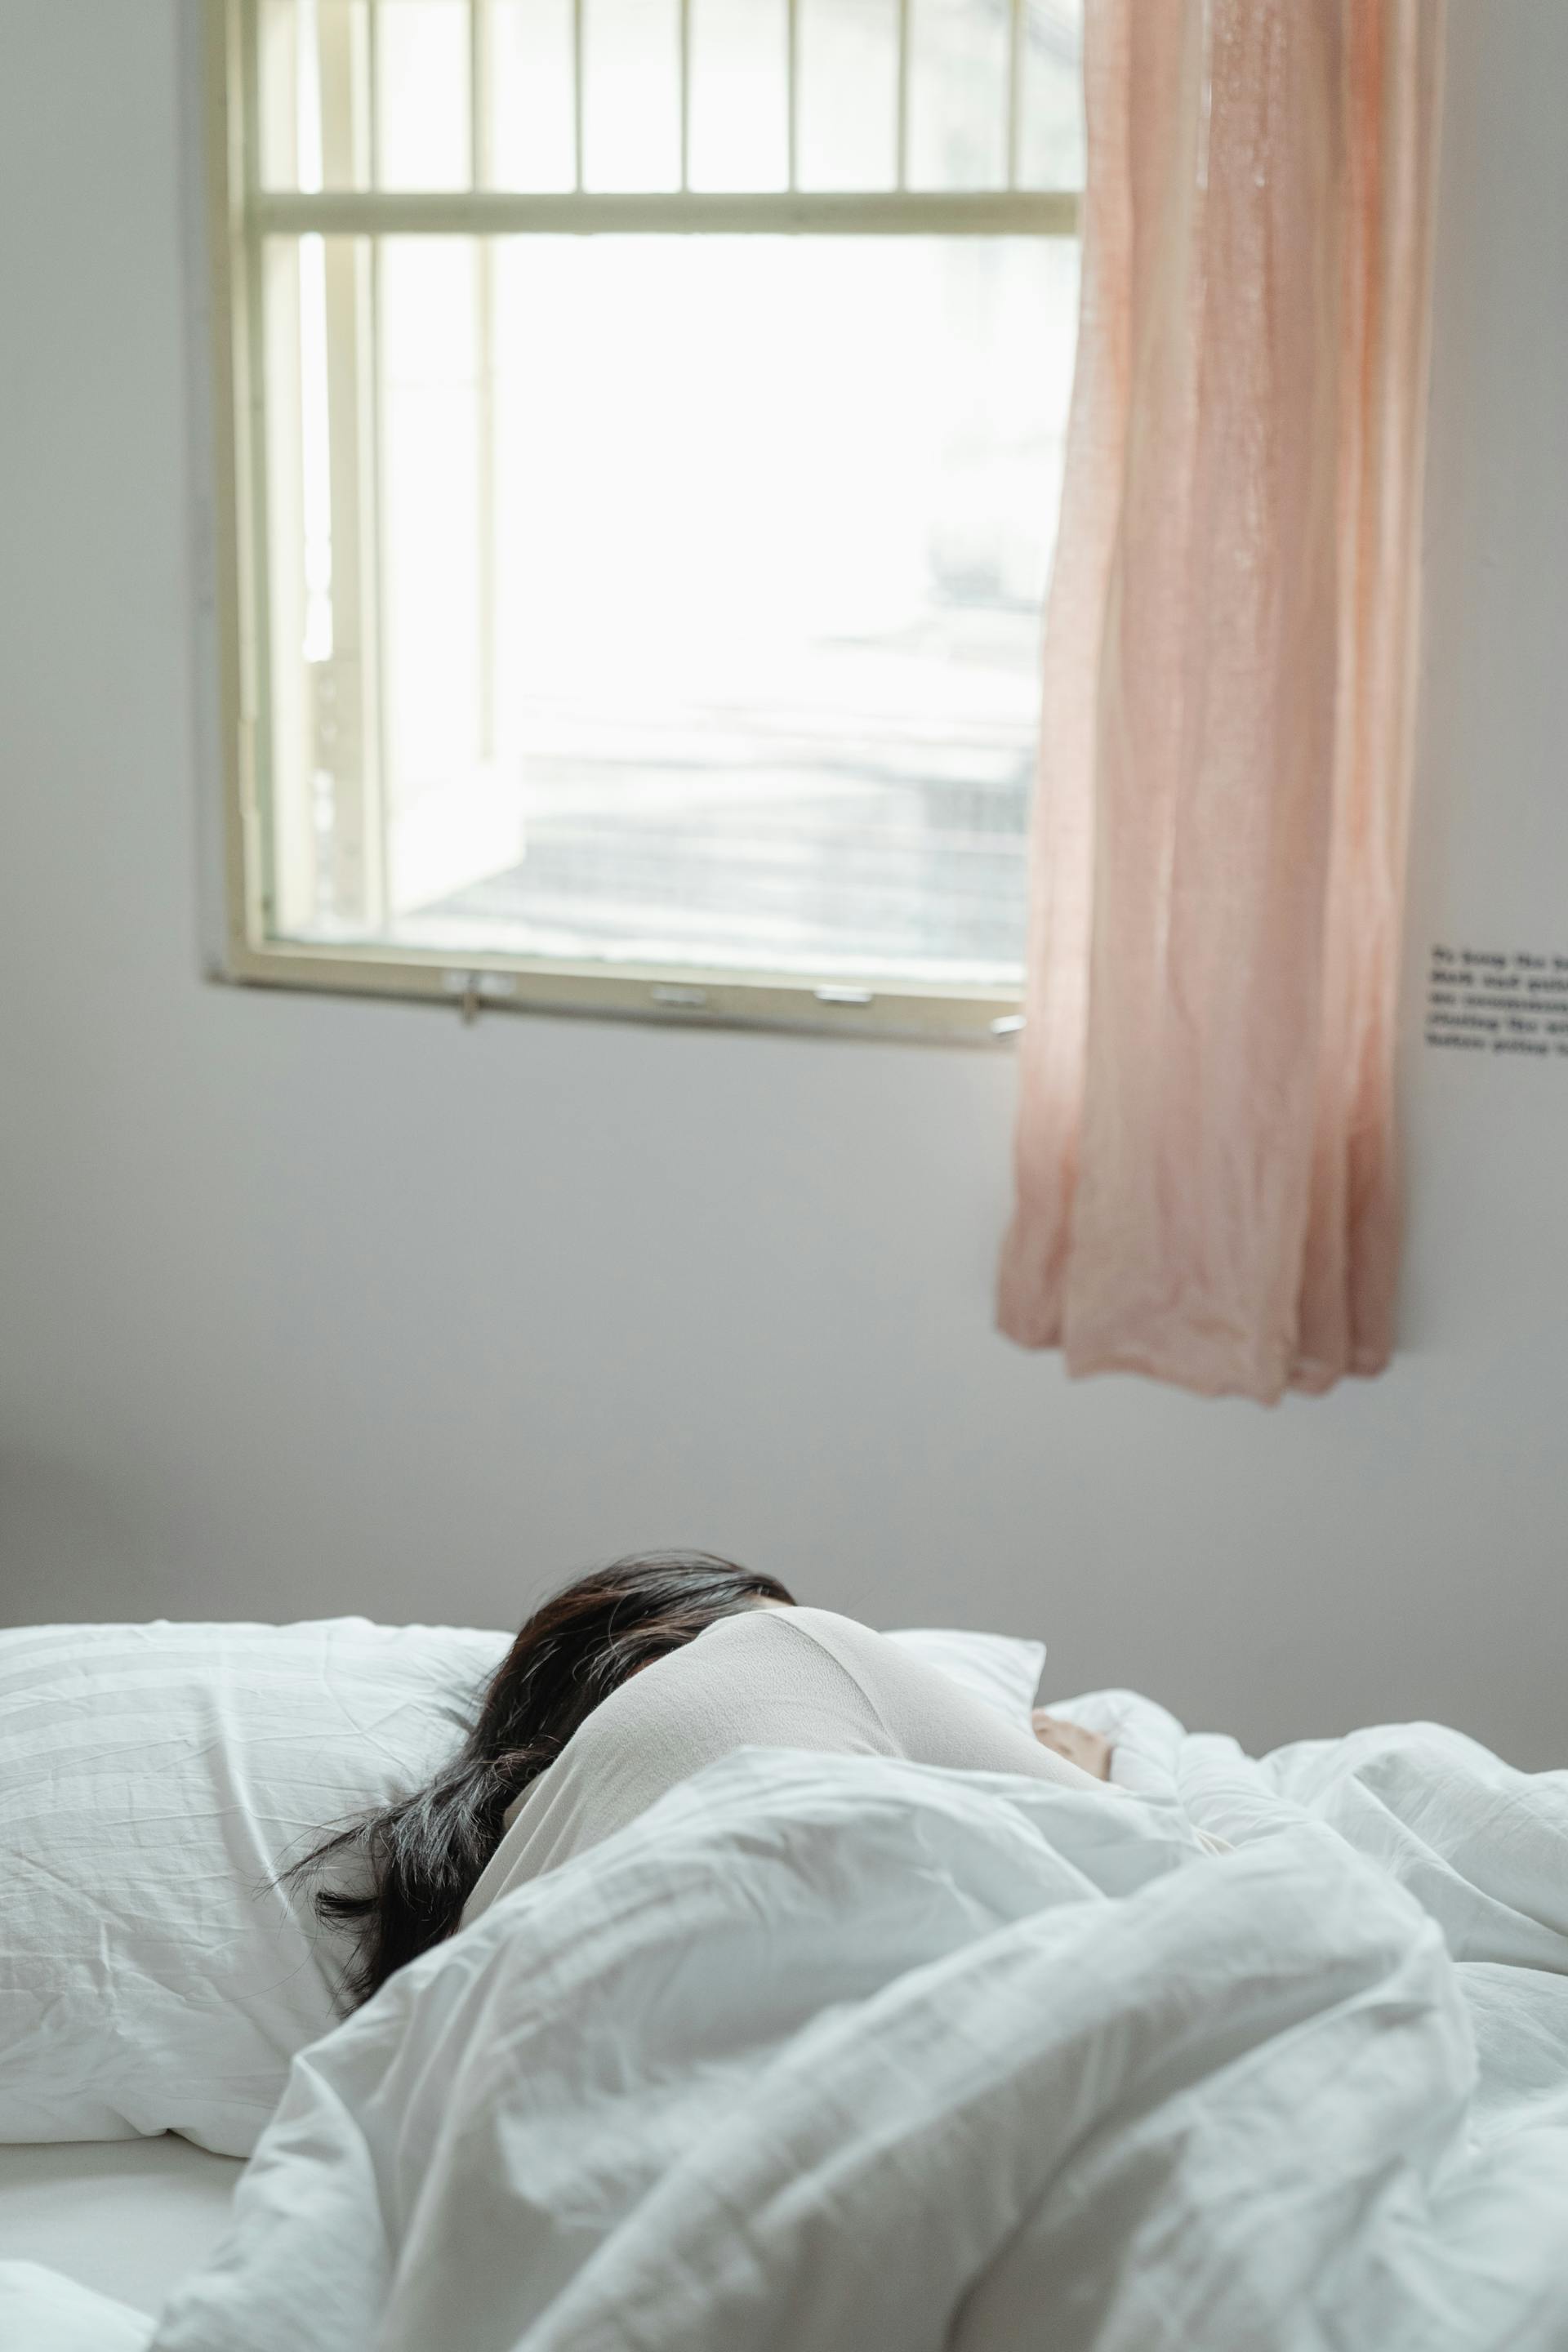 A woman sleeping in bed | Source: Pexels